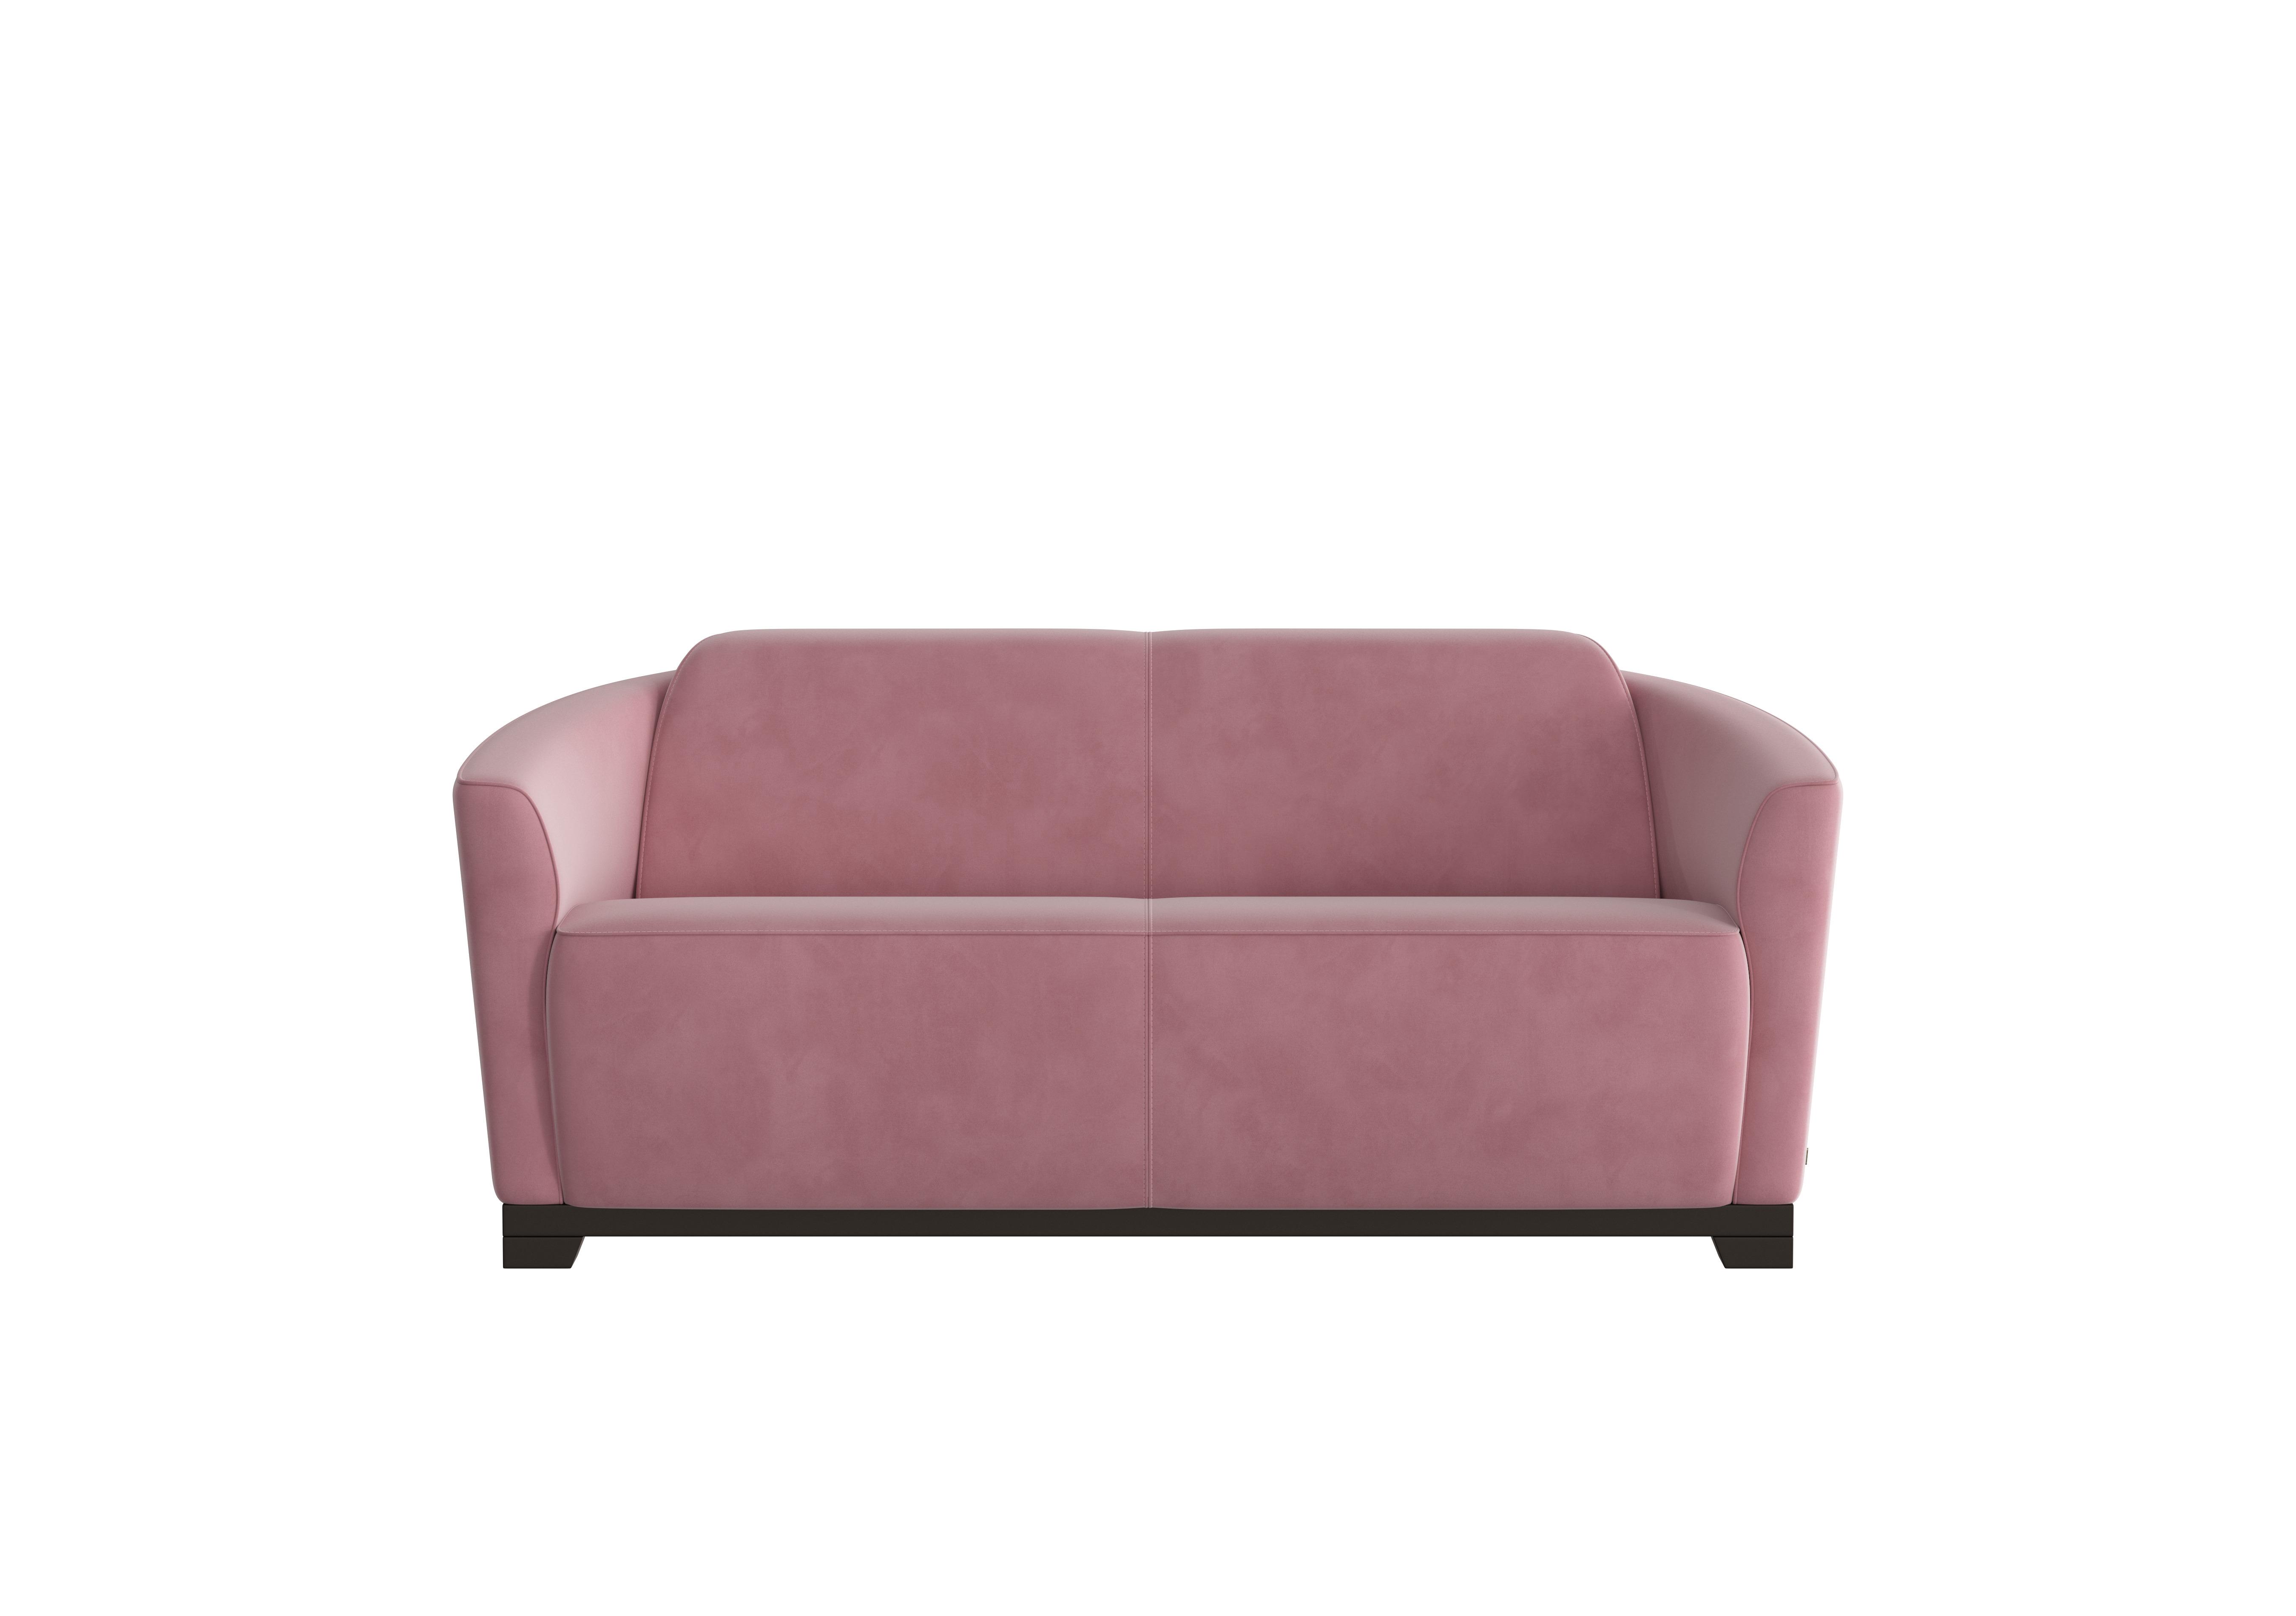 Ketty 2.5 Seater Fabric Sofa in Selma Rosa on Furniture Village